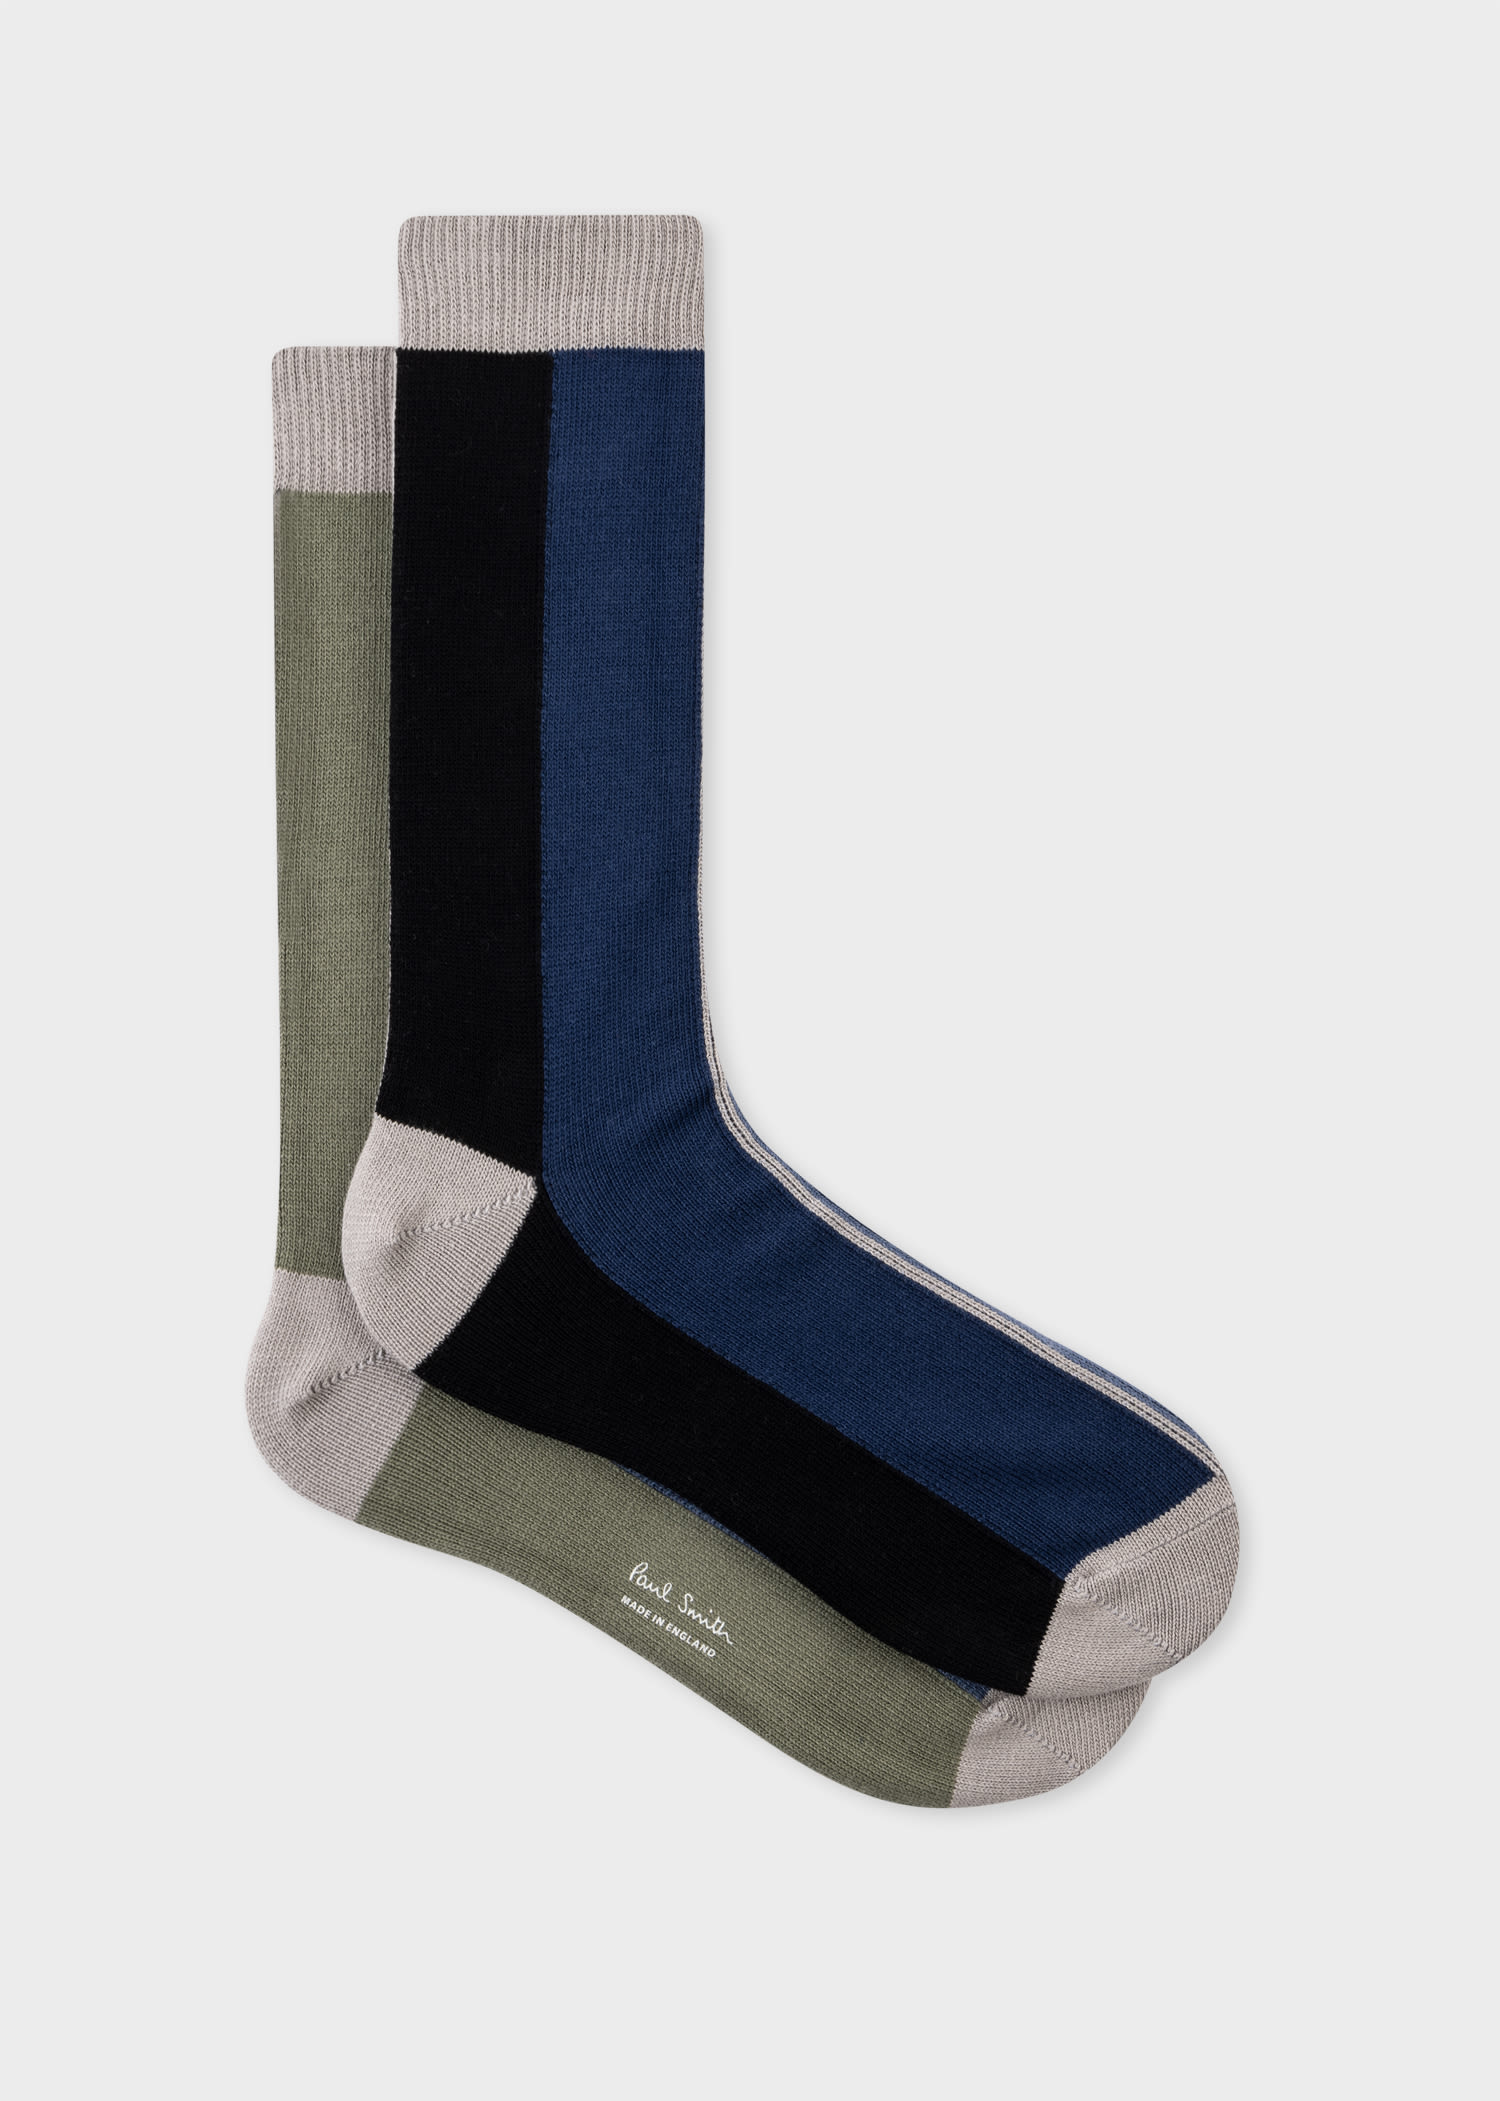 Men's Navy and Grey Colour Block Socks